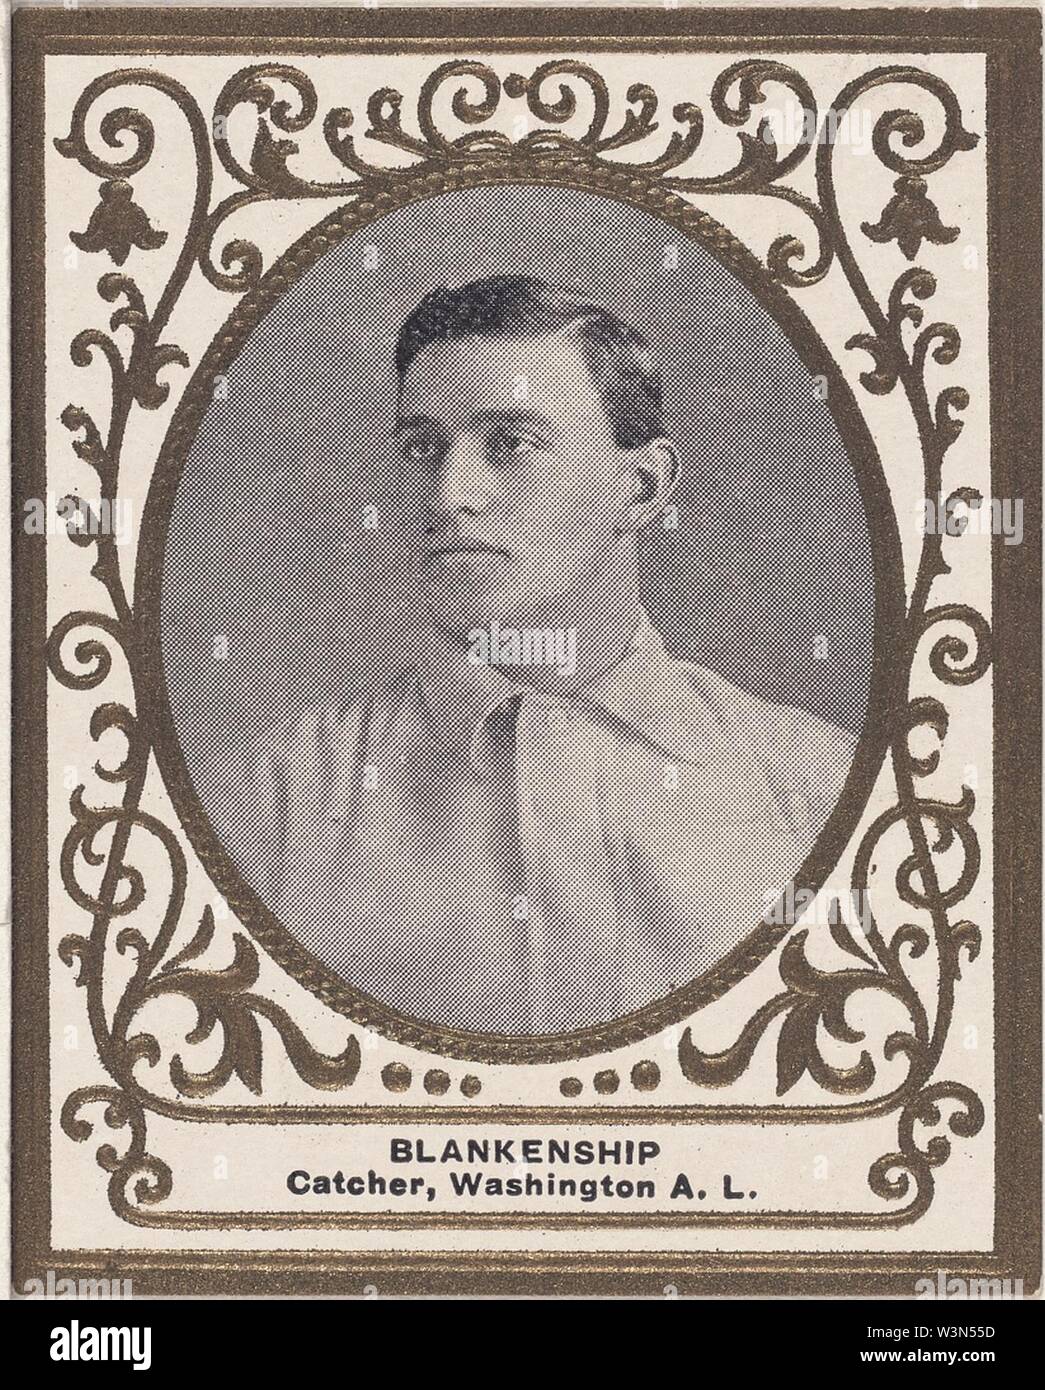 Cliff Blankenship, Washington cittadini, baseball card ritratto Foto Stock